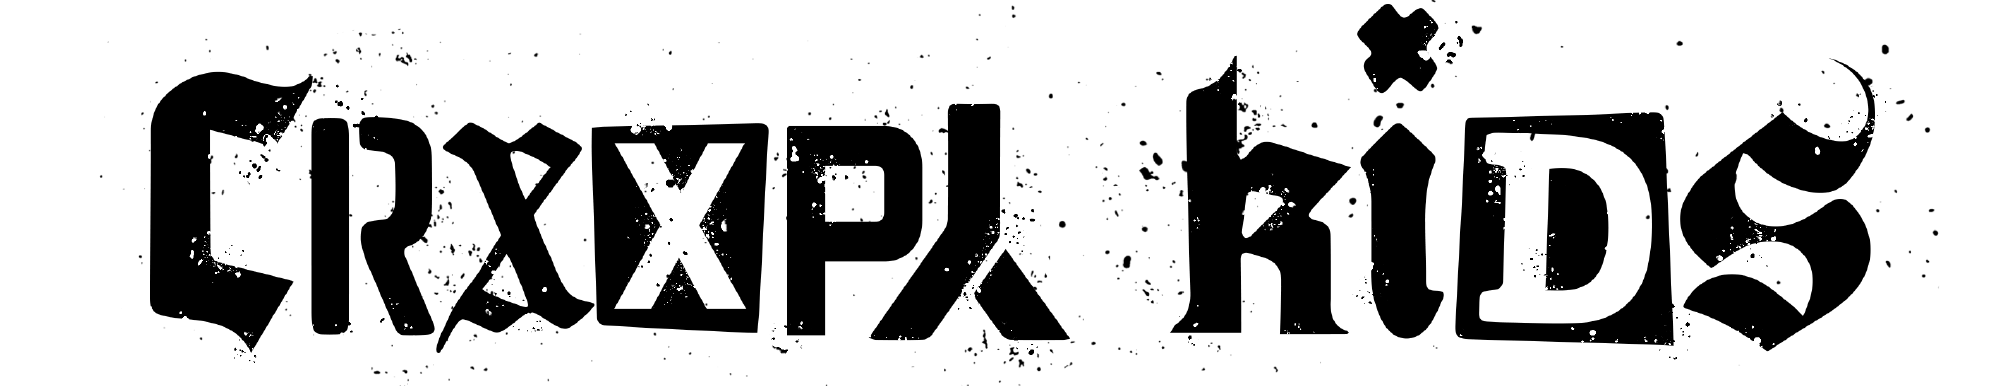 Crxxpy Kids Band Logo